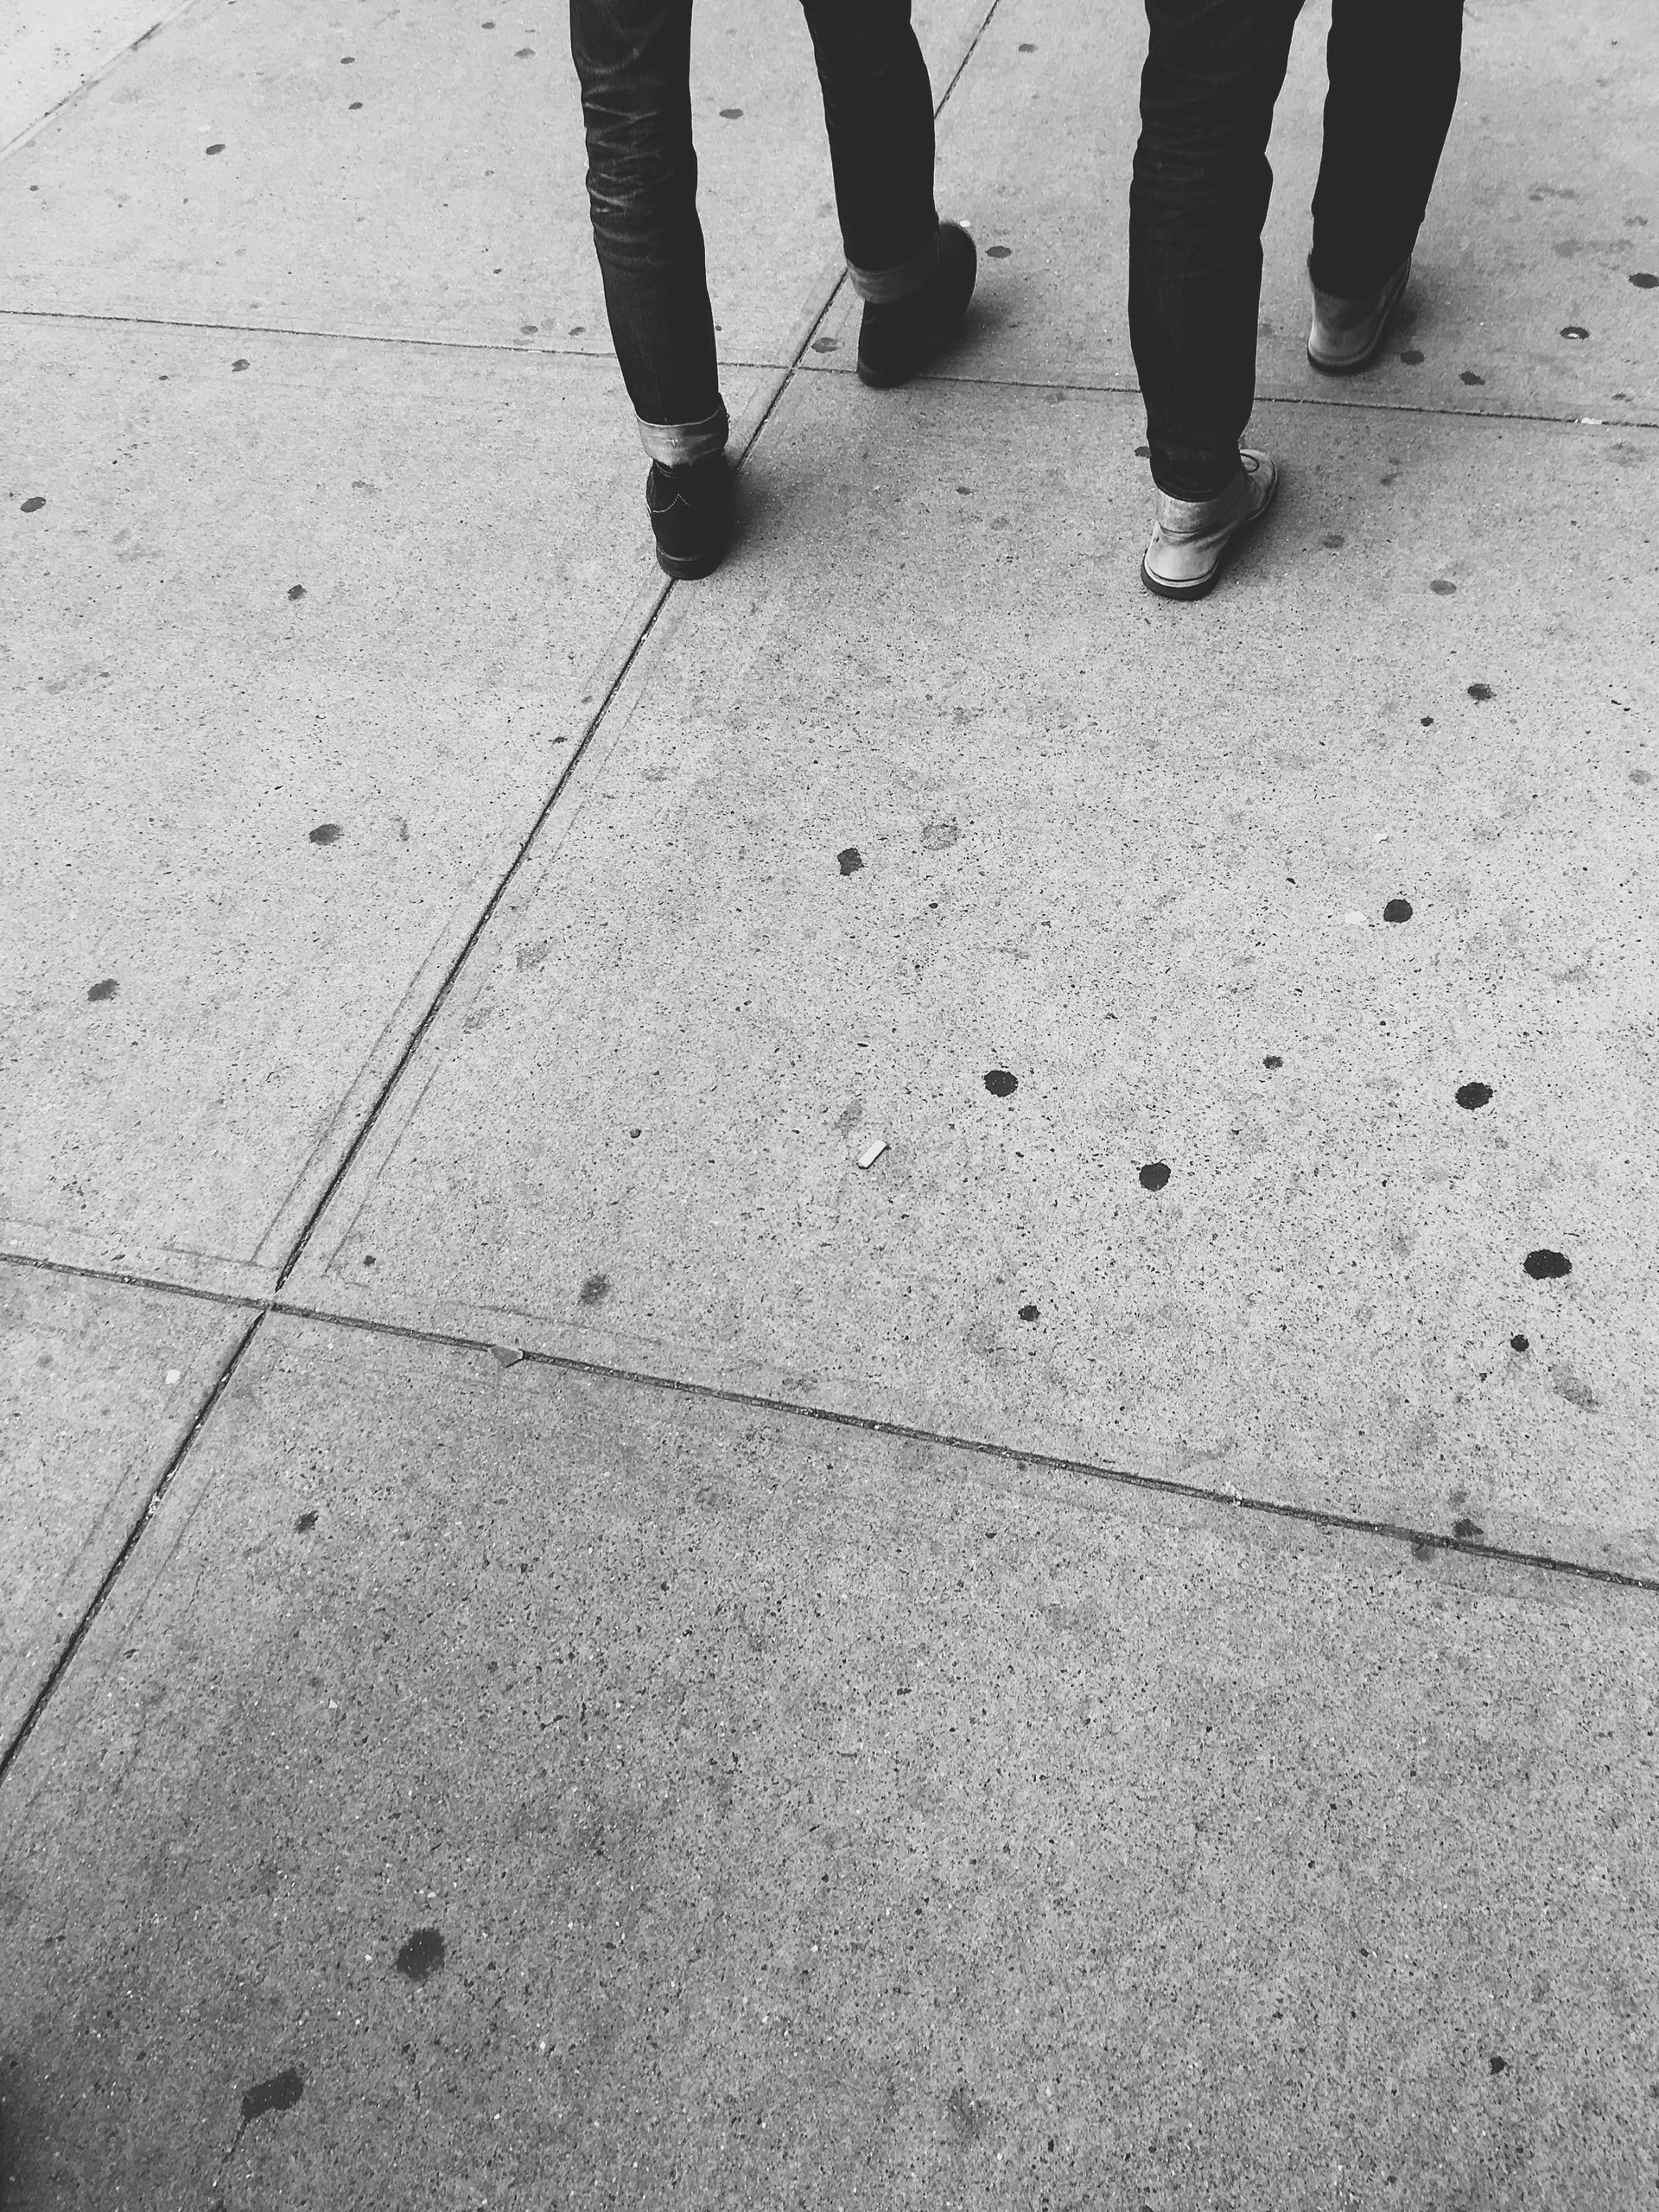 Two sets of feet walking away